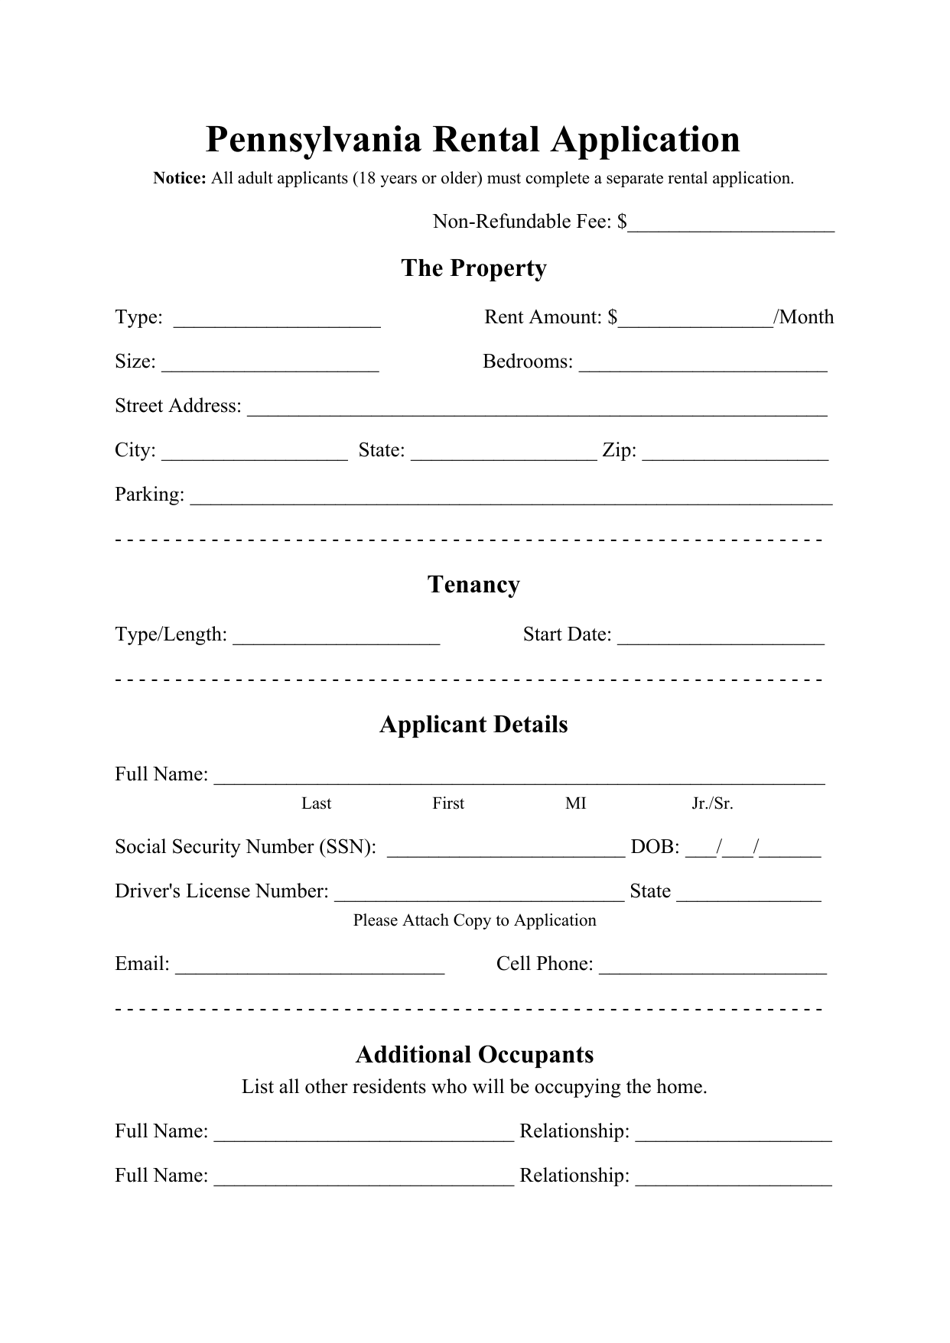 Rental Application Form - Pennsylvania, Page 1